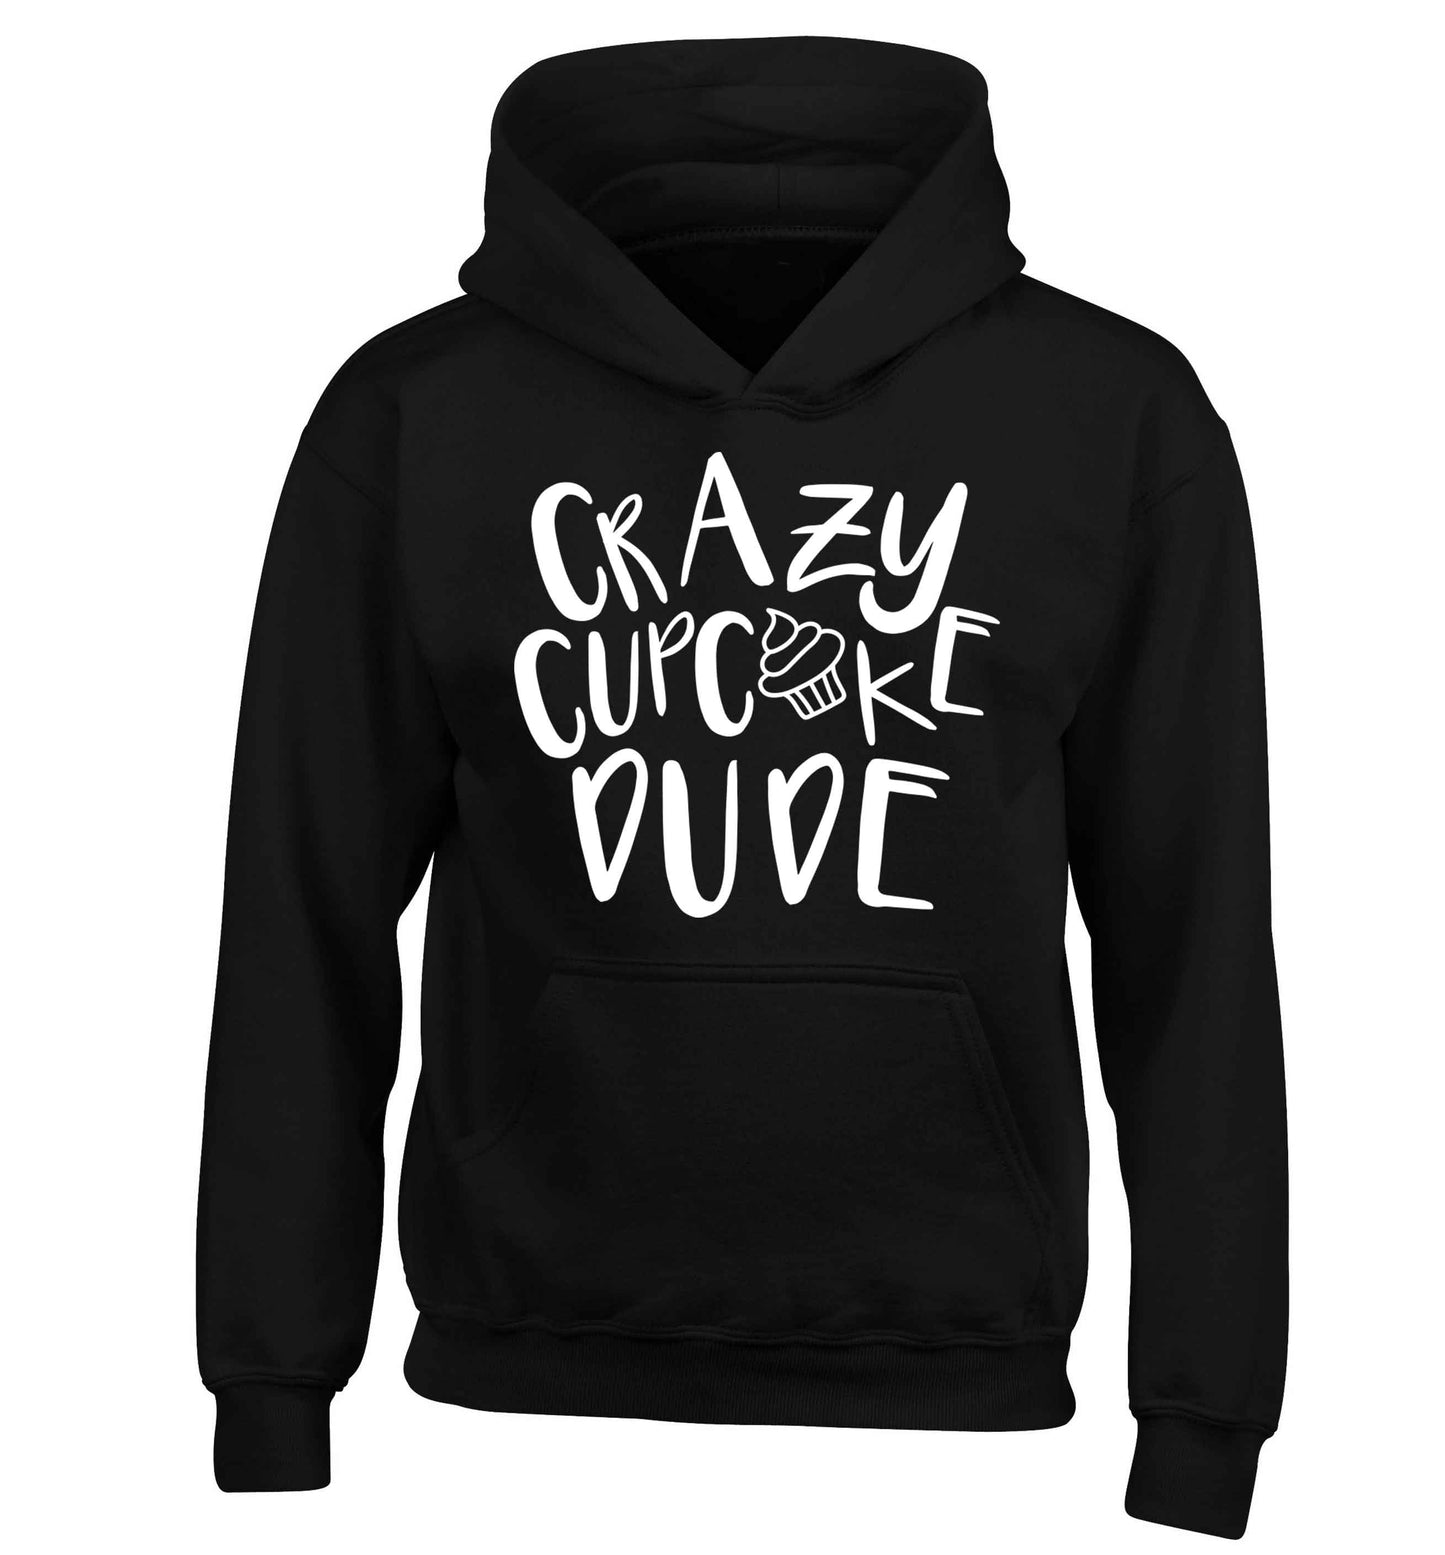 Crazy cupcake dude children's black hoodie 12-13 Years